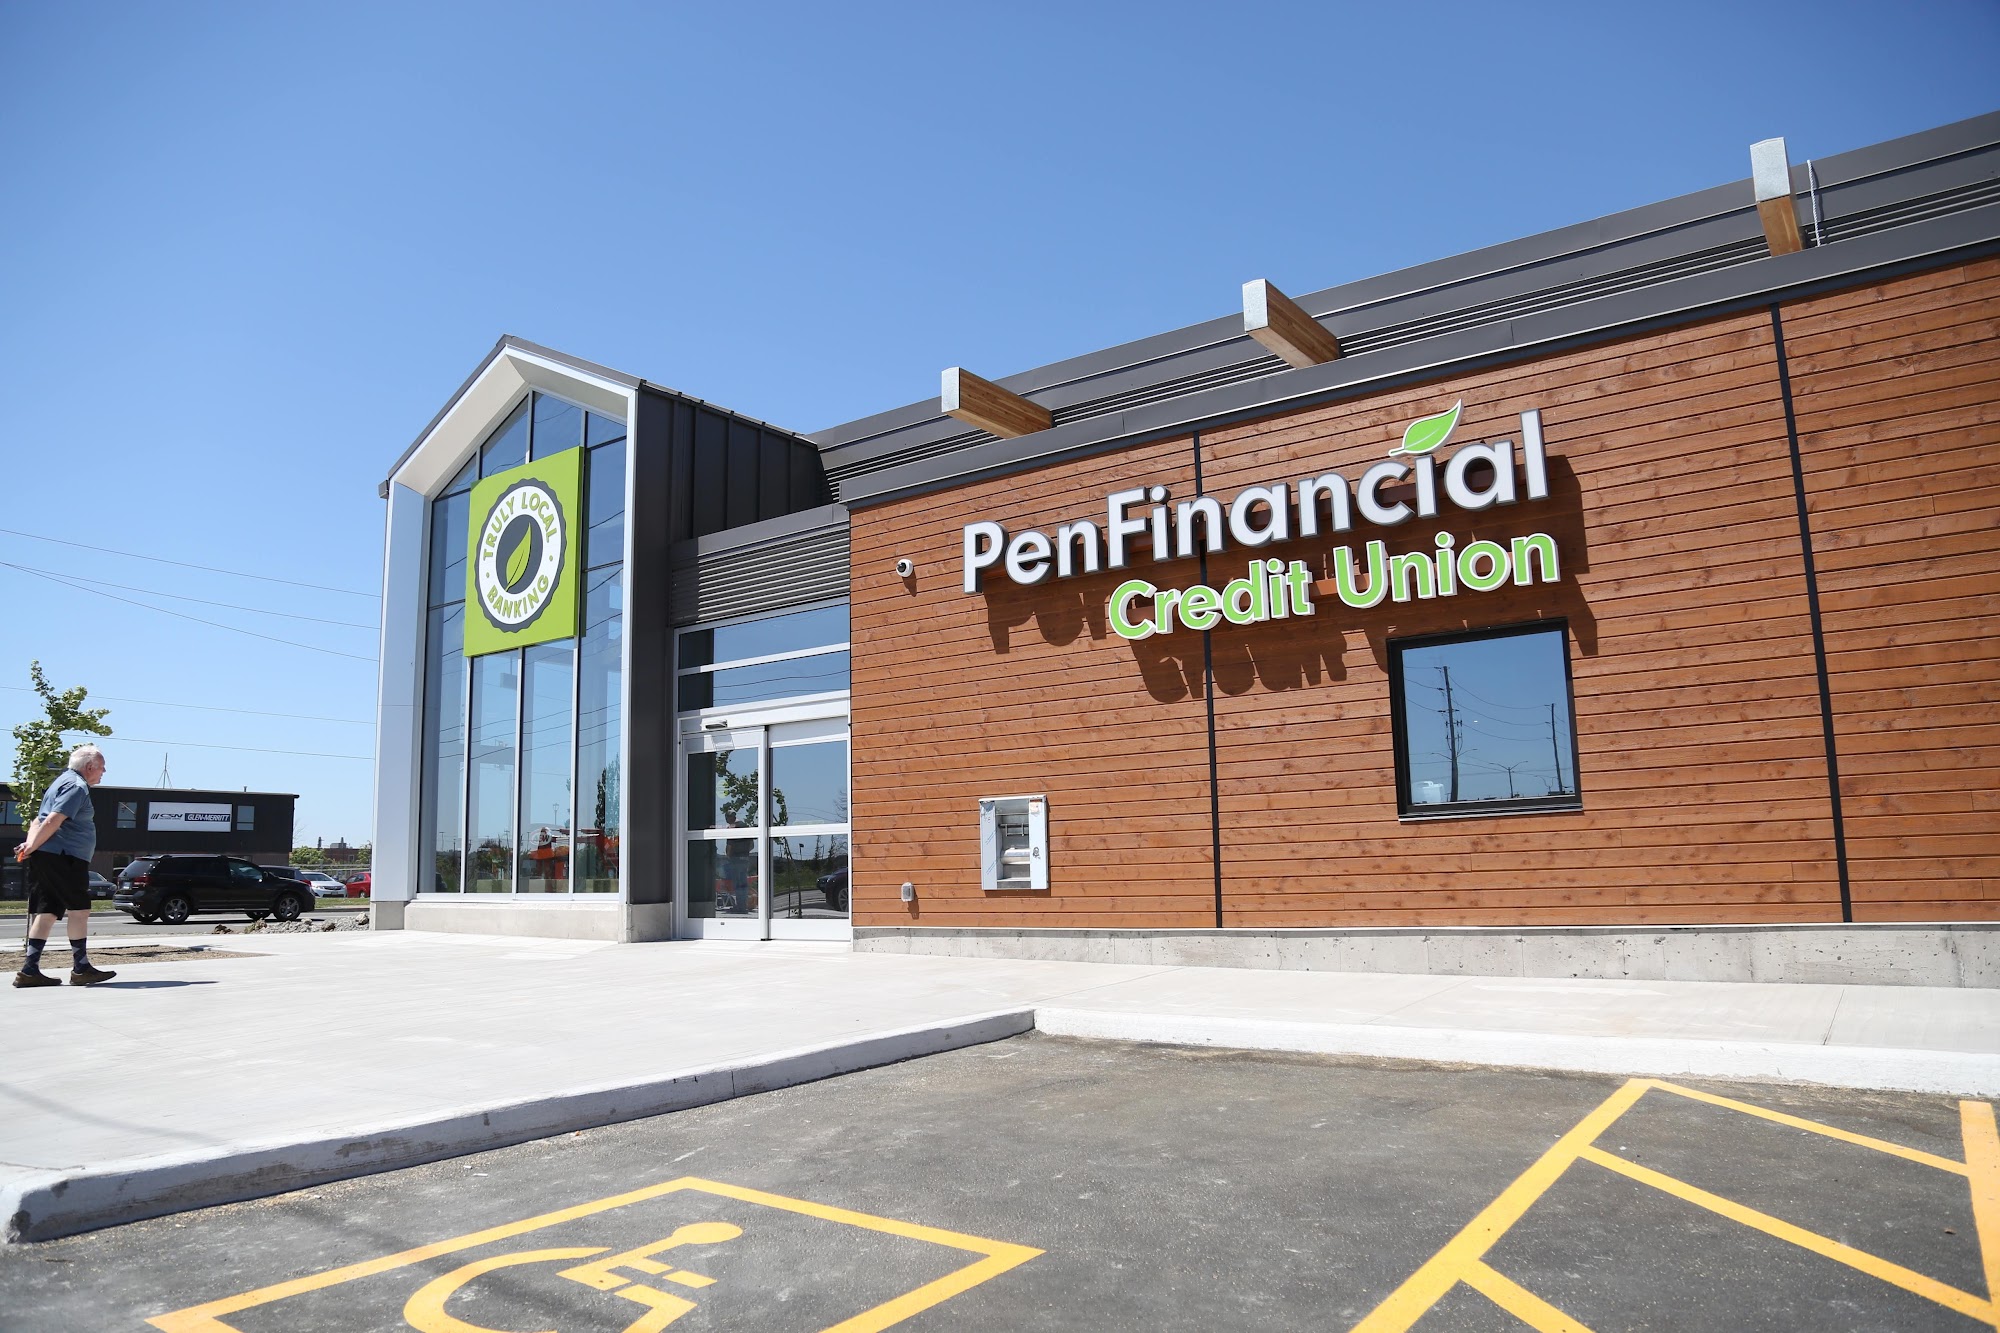 PenFinancial Credit Union